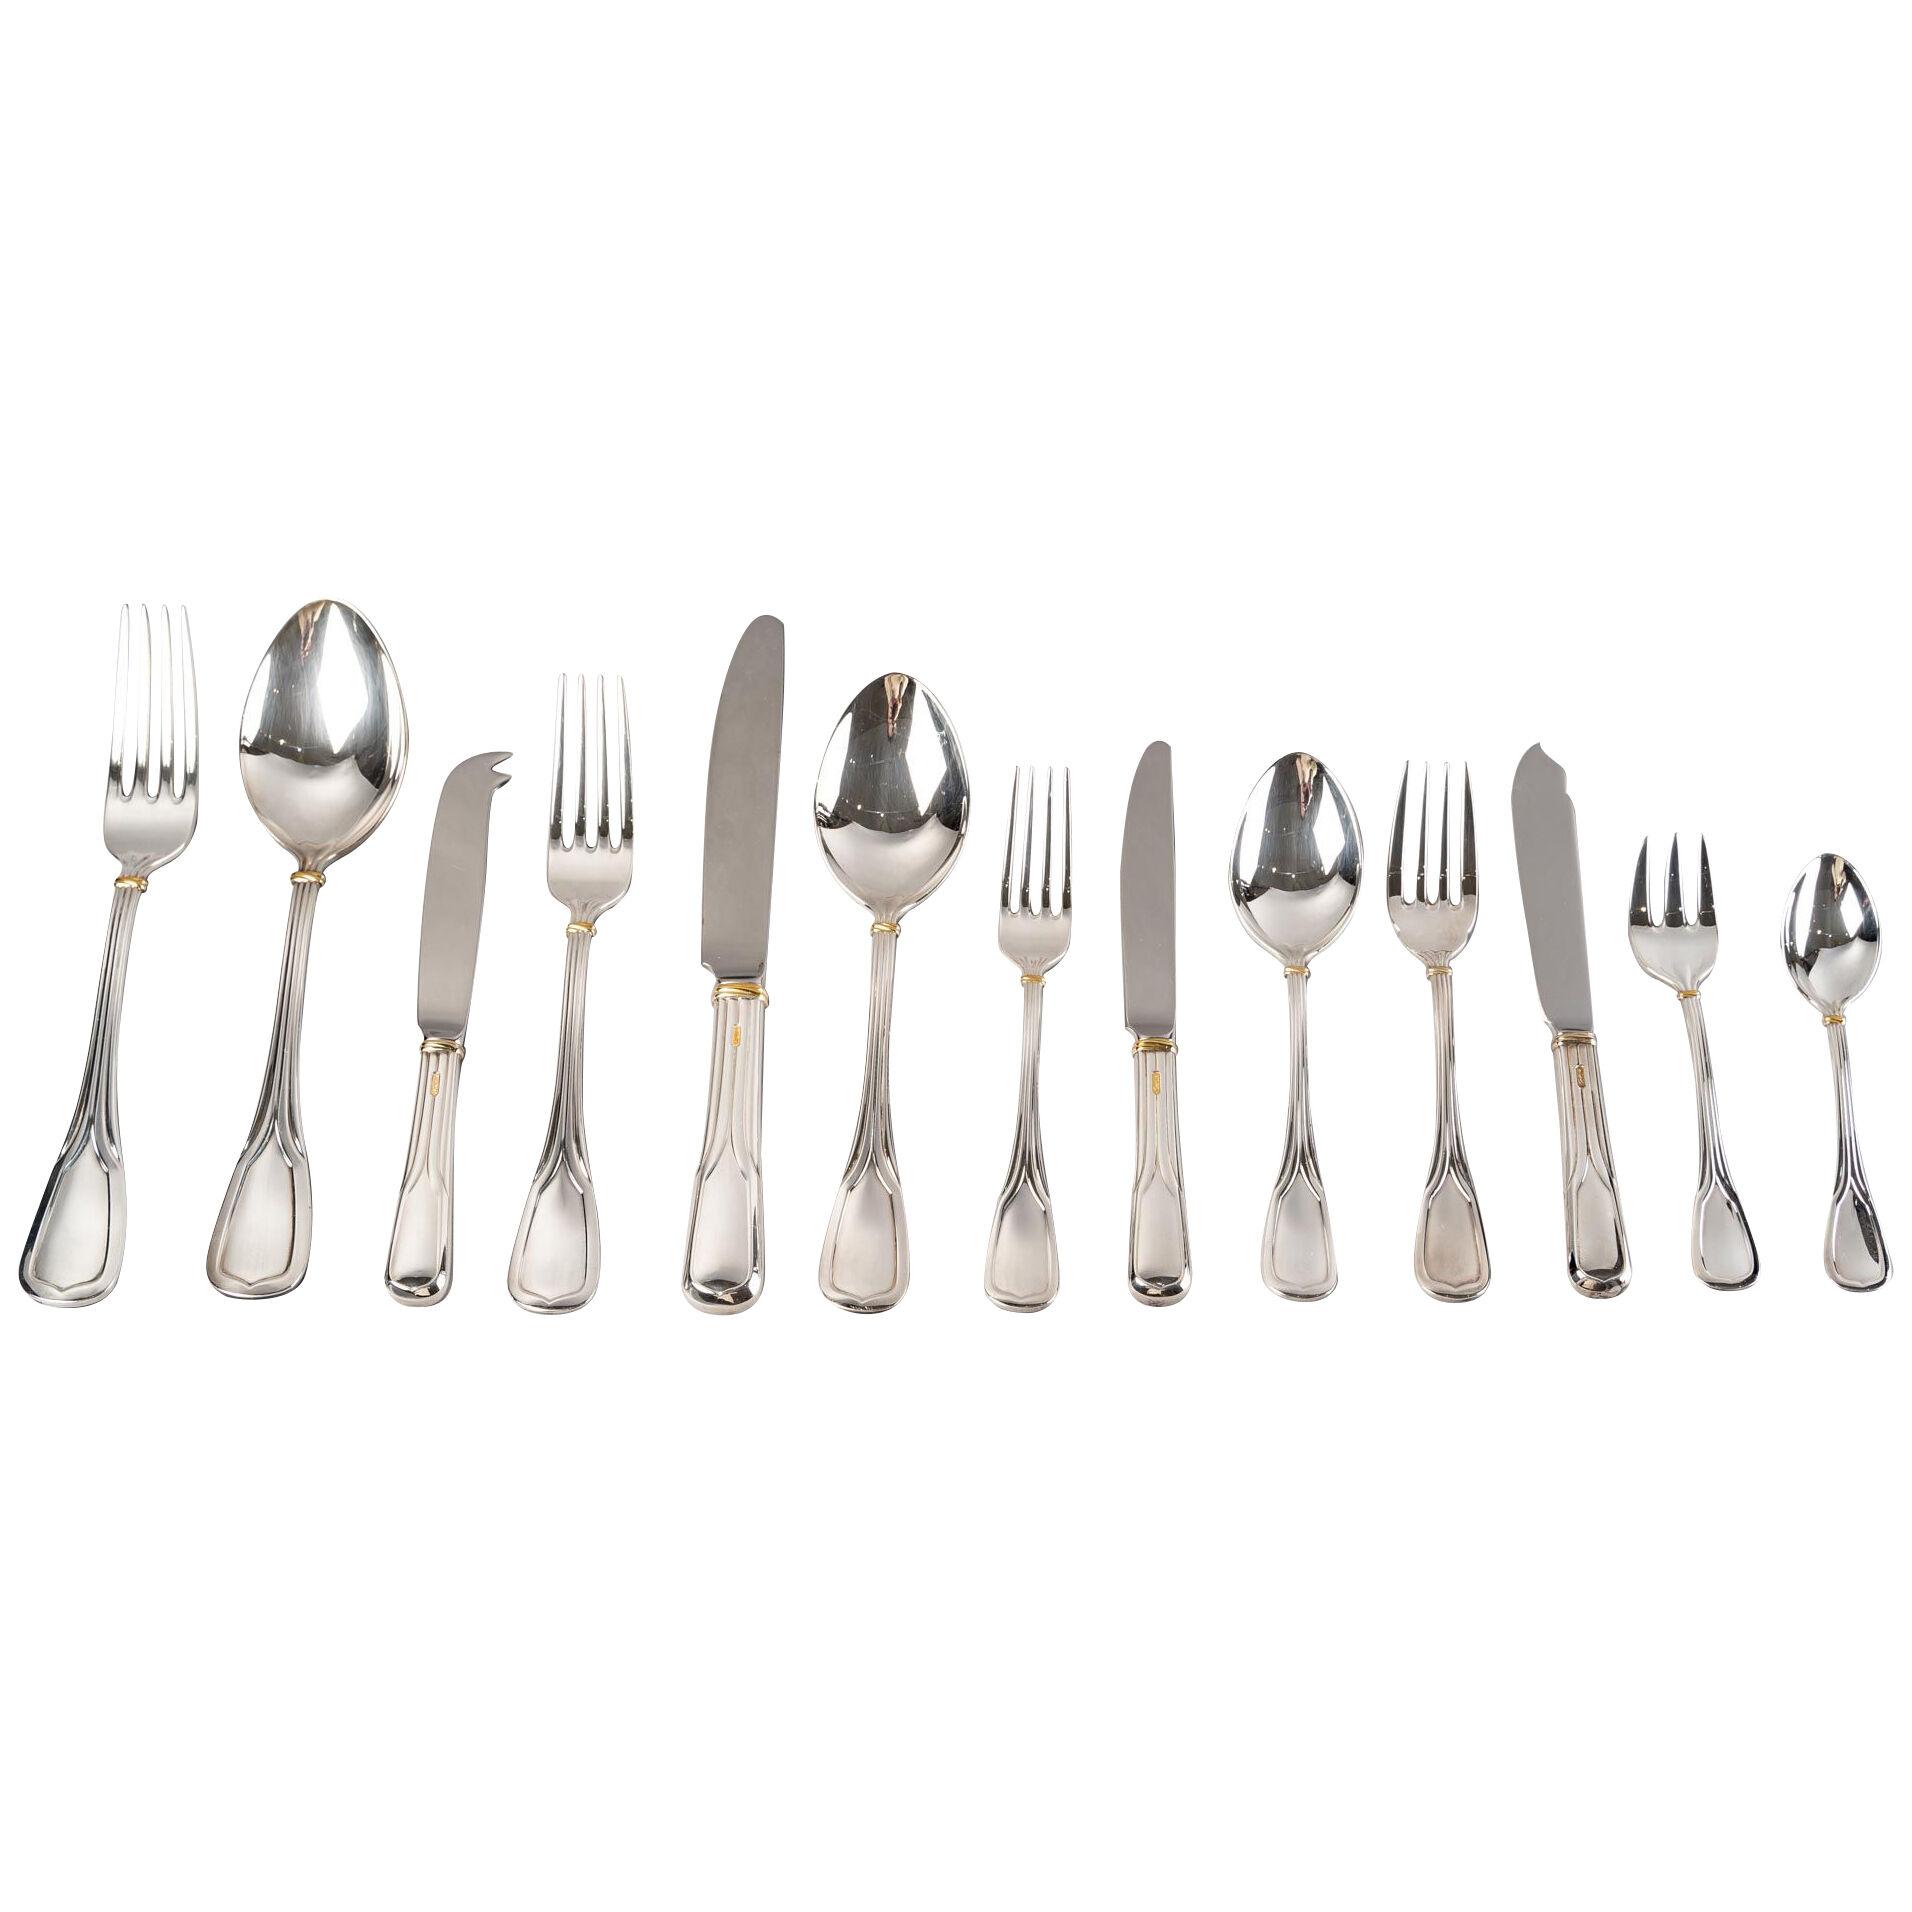 Cartier La Maison Du Prince - Cutlery Flatware Silver Plated 110 Pieces In Box